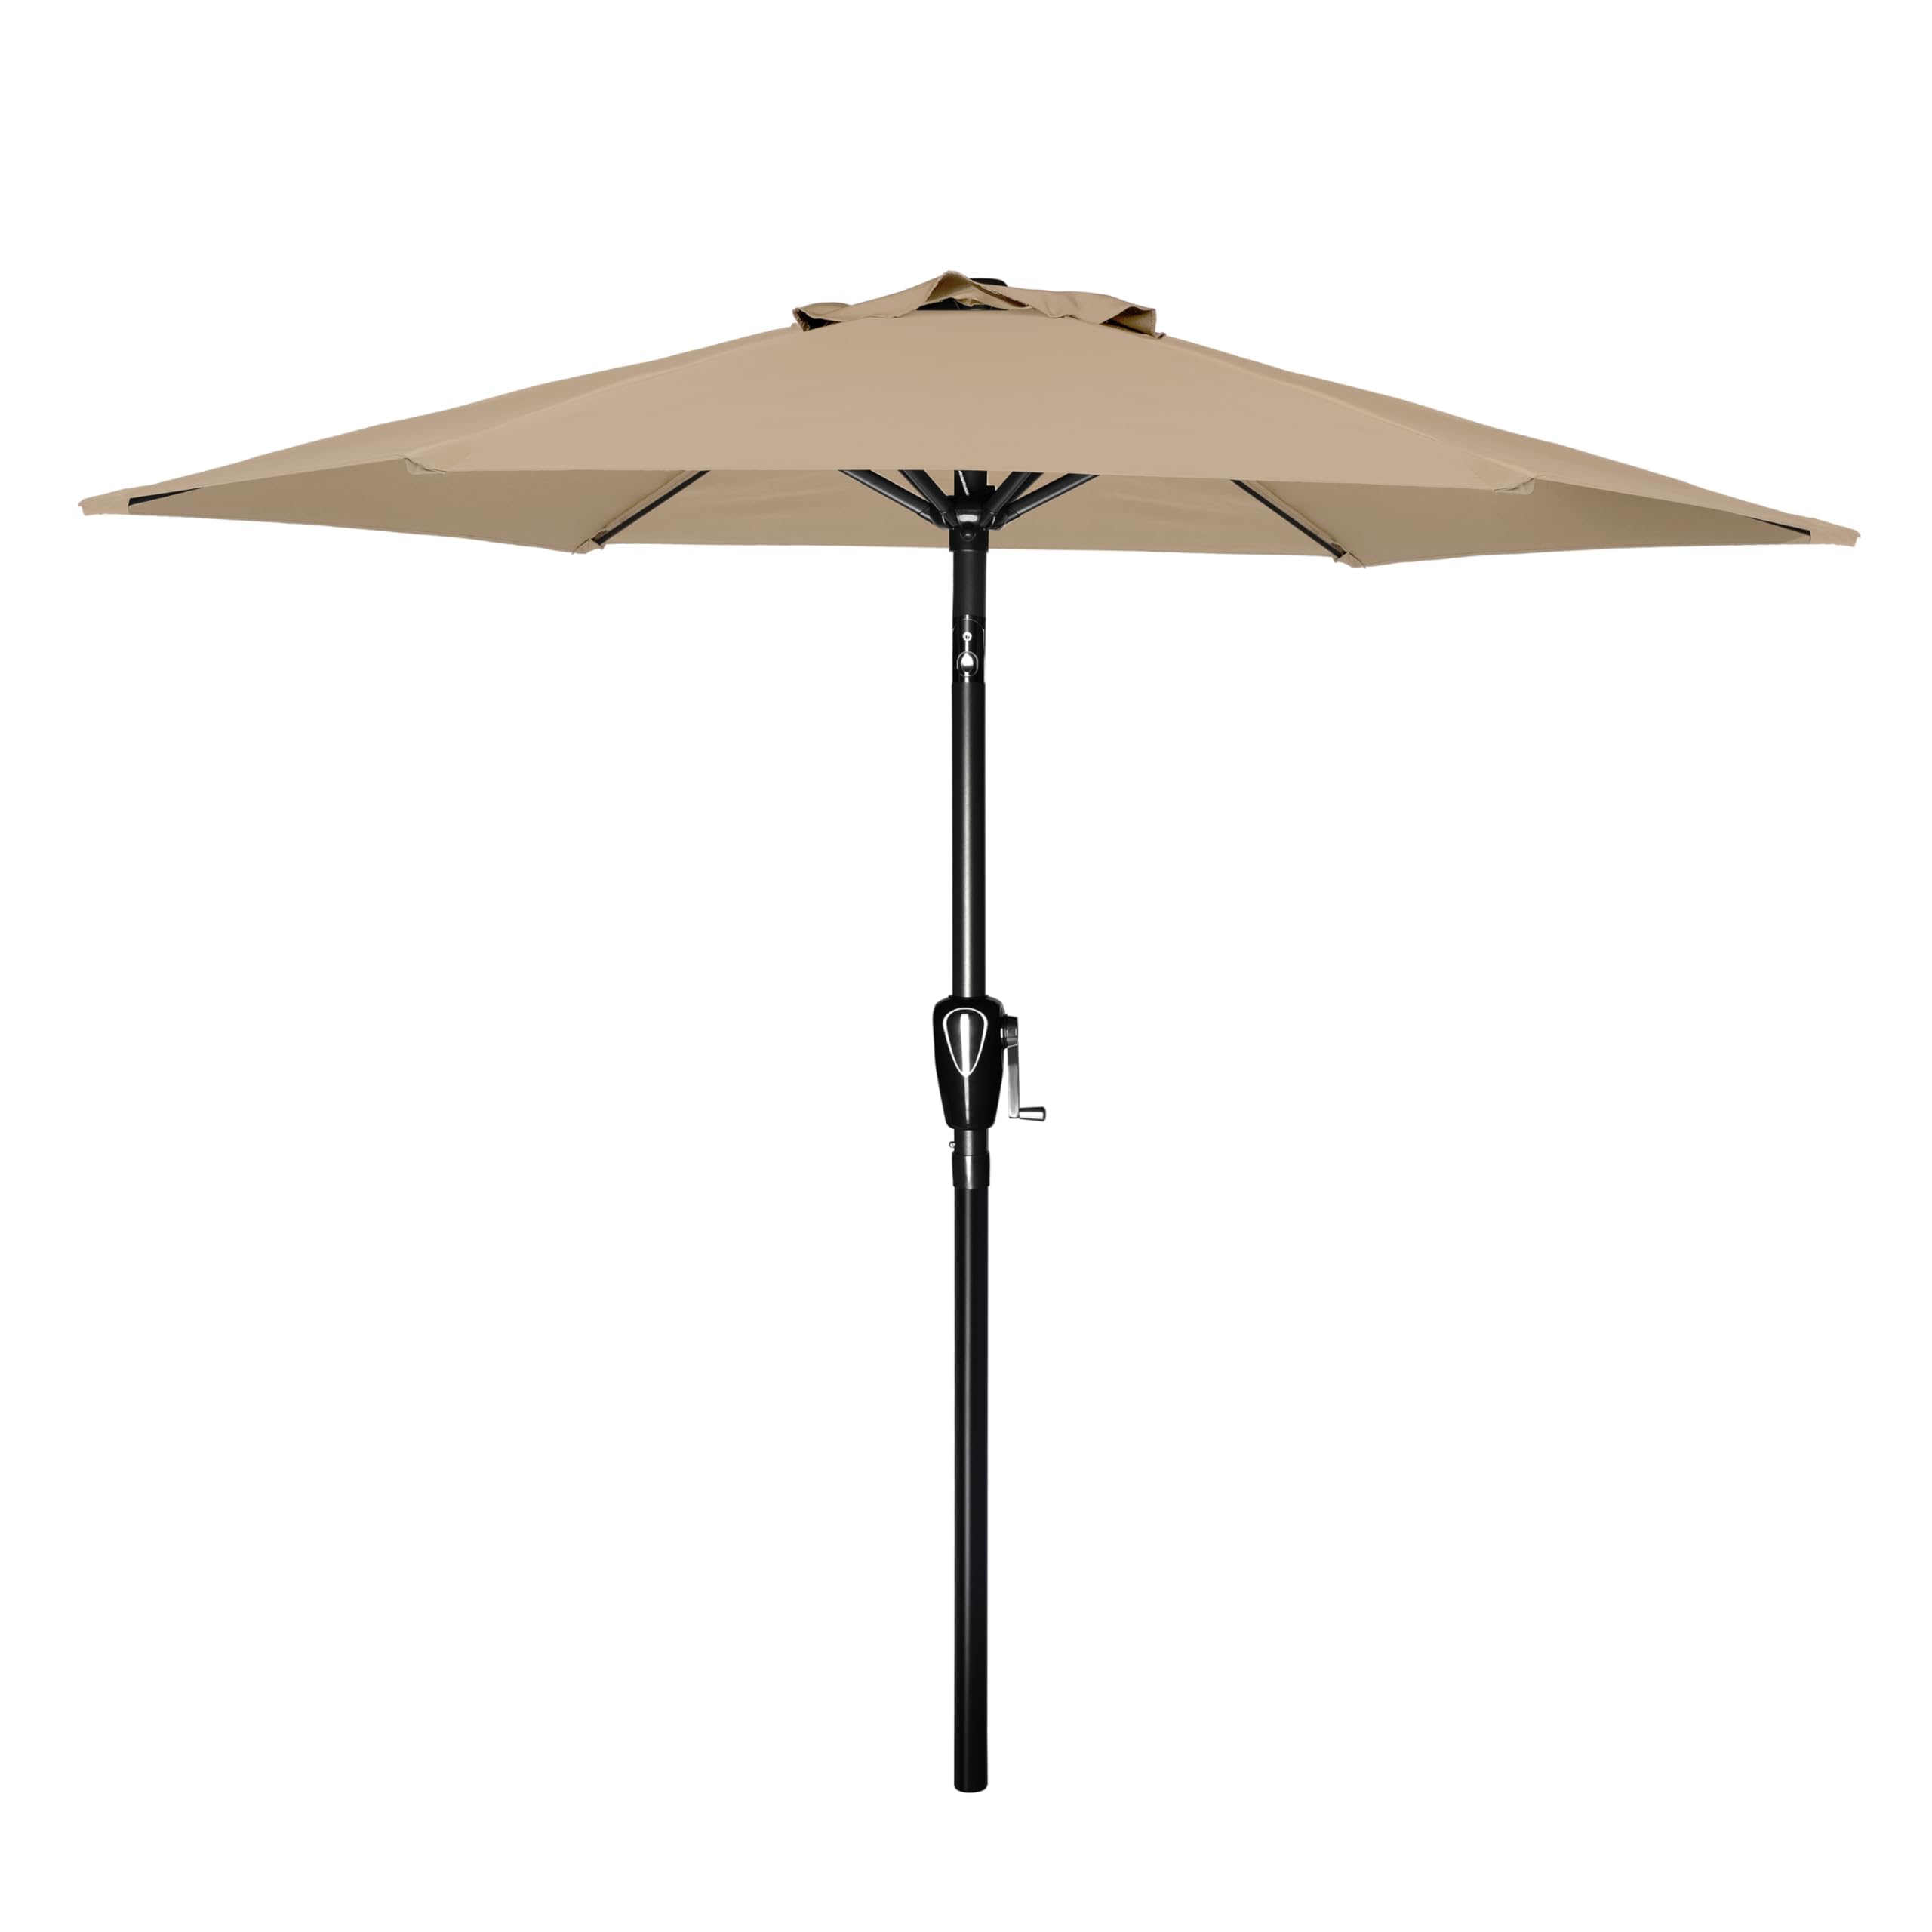 Simple Deluxe 10' Patio Umbrella Outdoor Table Market Yard Umbrella with Push Button Tilt/Crank $38 @ Amazon